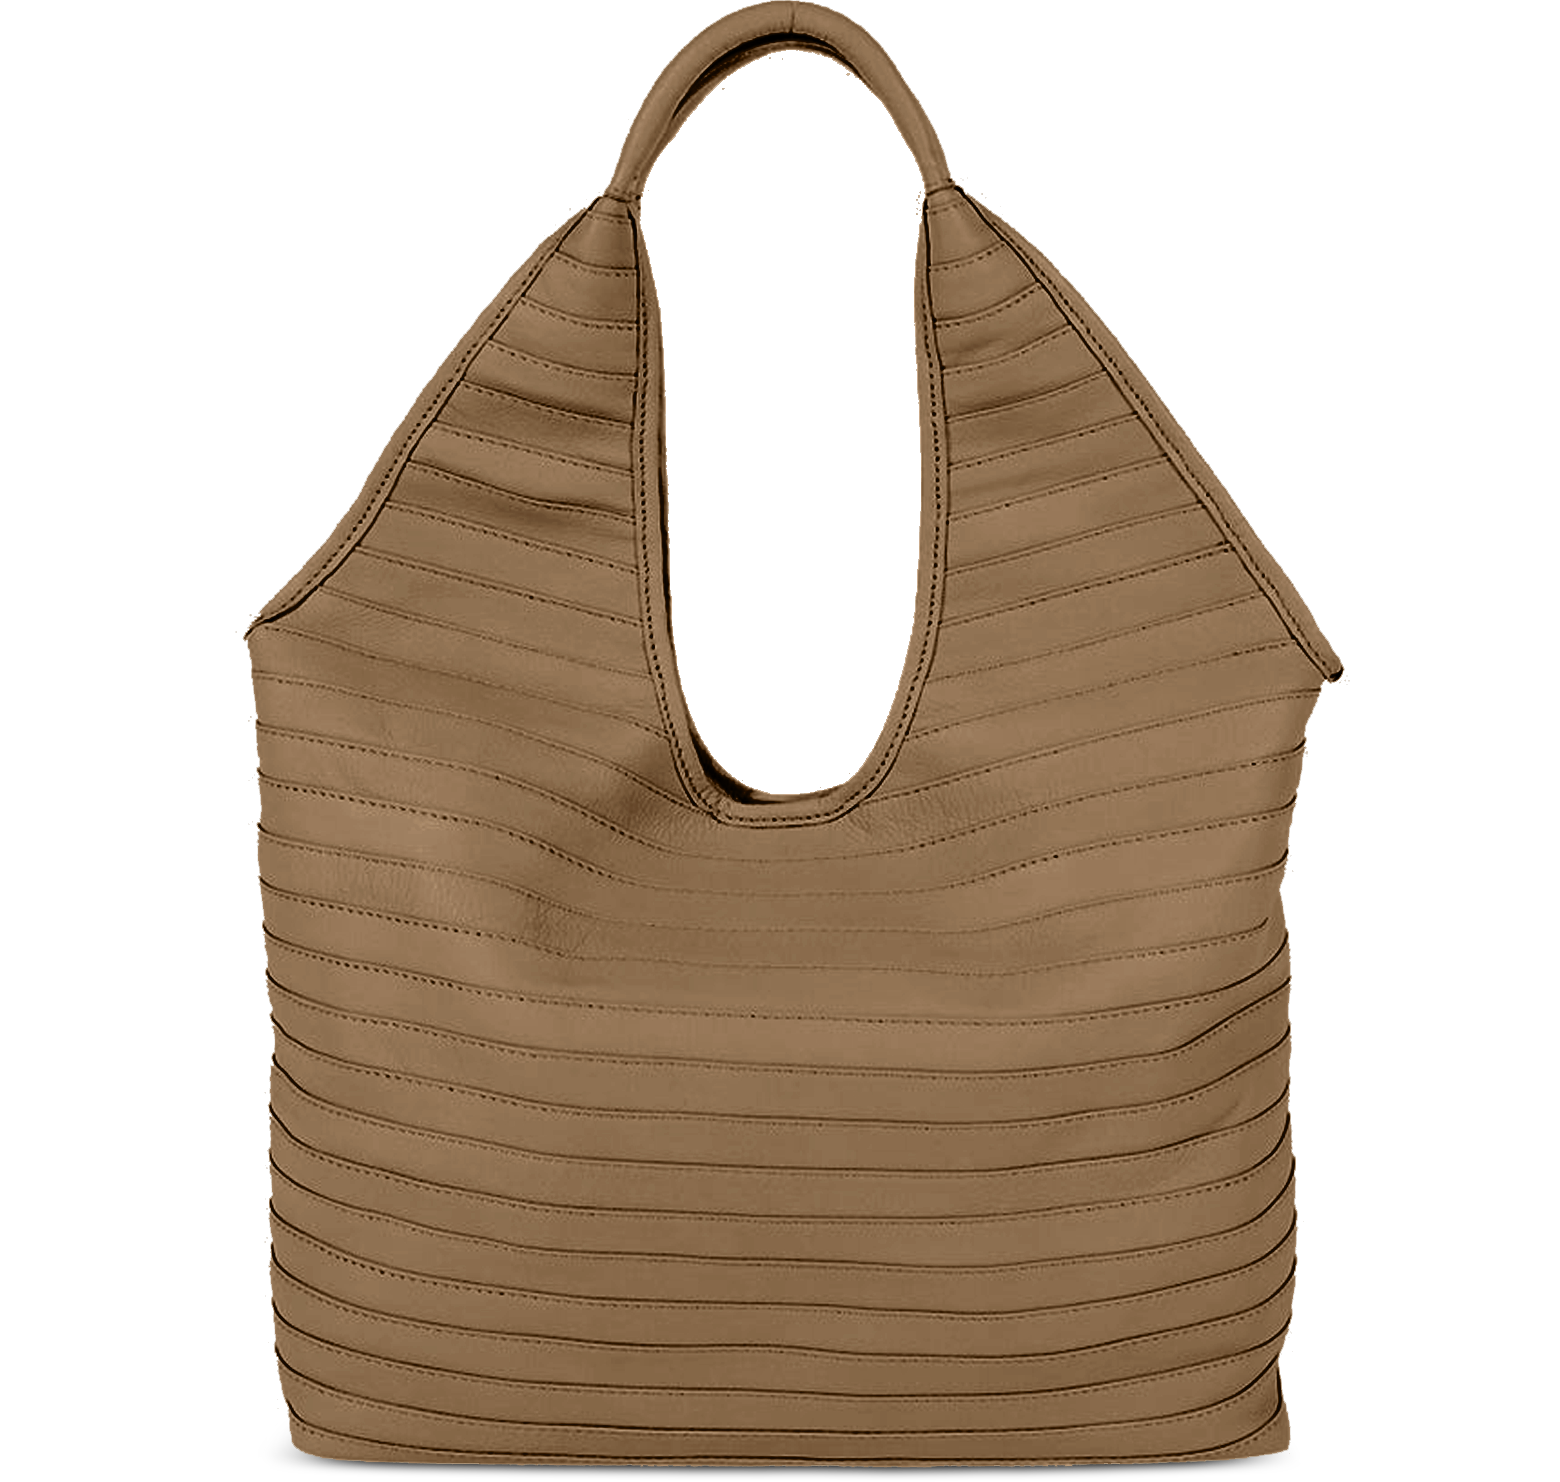 Alma Tonutti 5211 - Shoulder Bag at FORZIERI